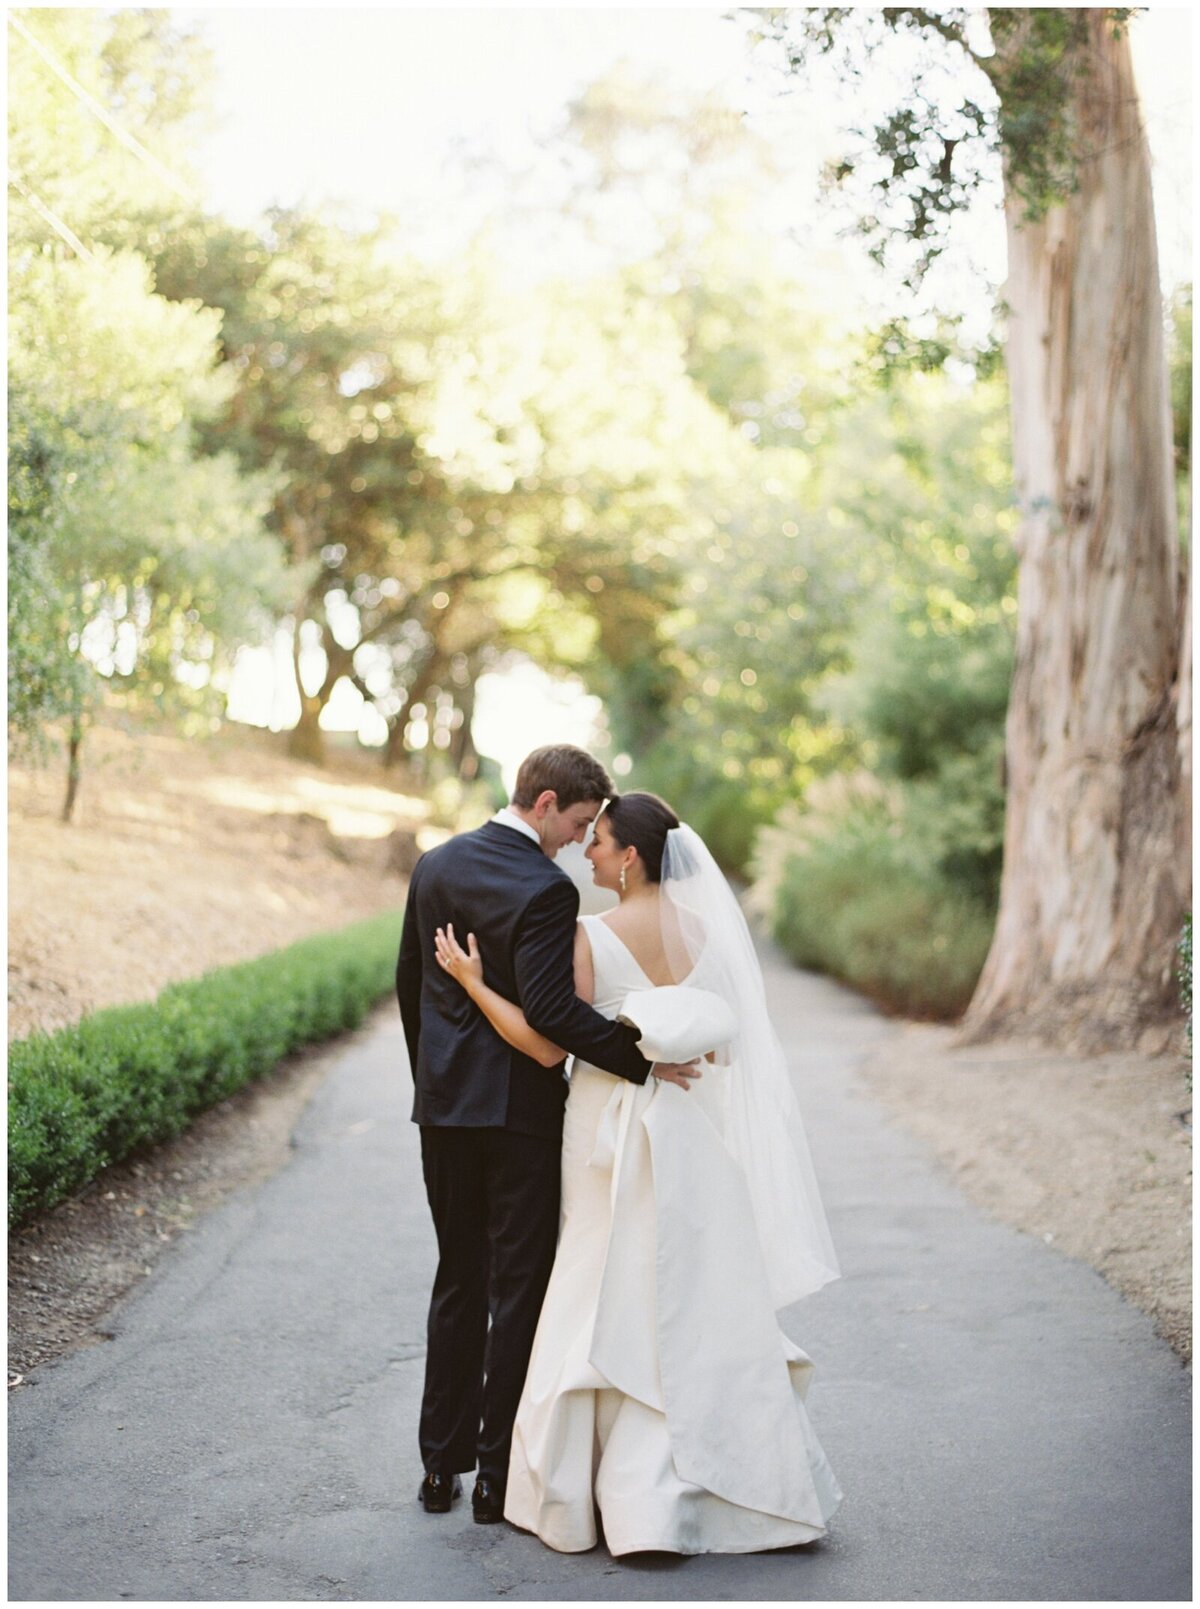 Kelsey-Alex-Sonoma-Buena-Vista-Winery-Wedding-Cassie-Valente-Photography-0146